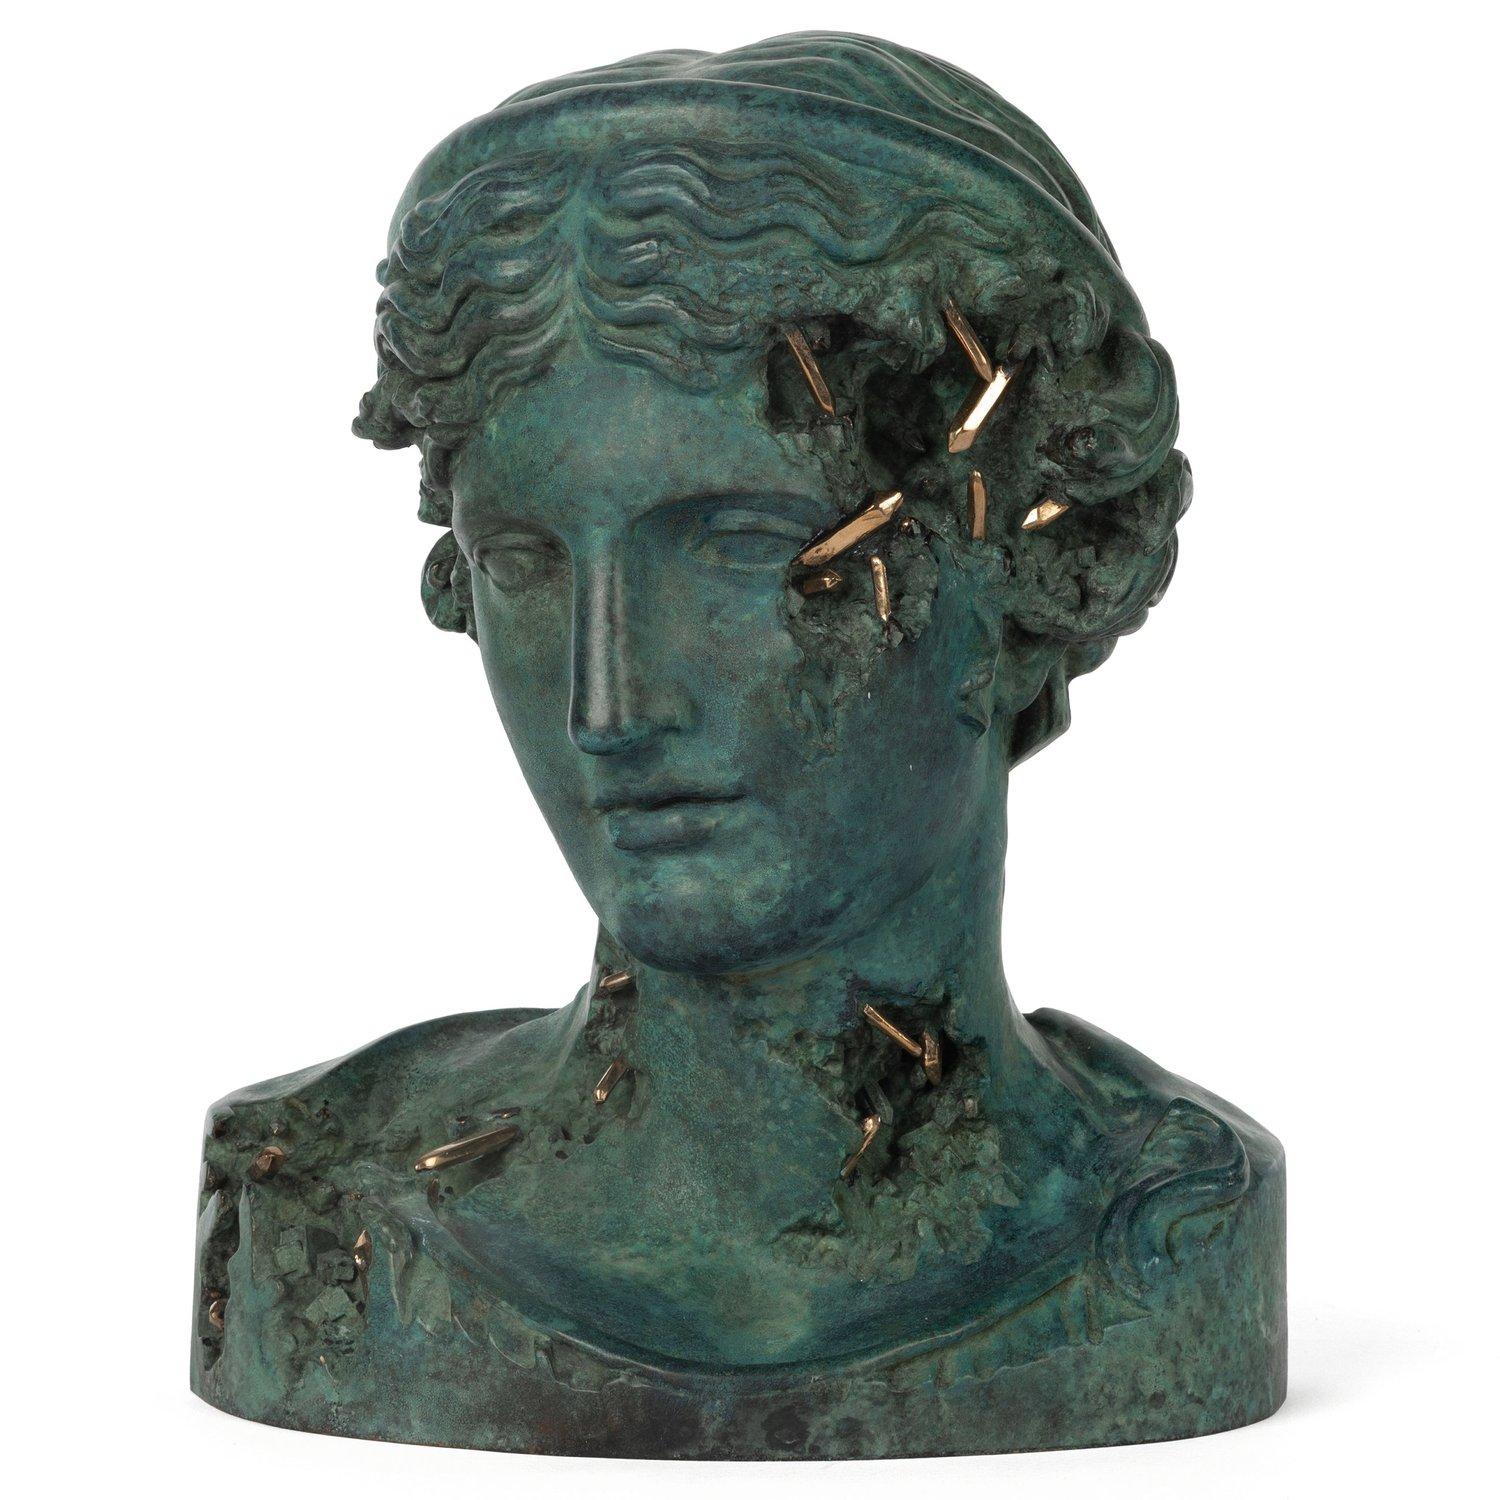  Daniel Arsham Figurative Sculpture - Bronze Eroded Melpomene Figure